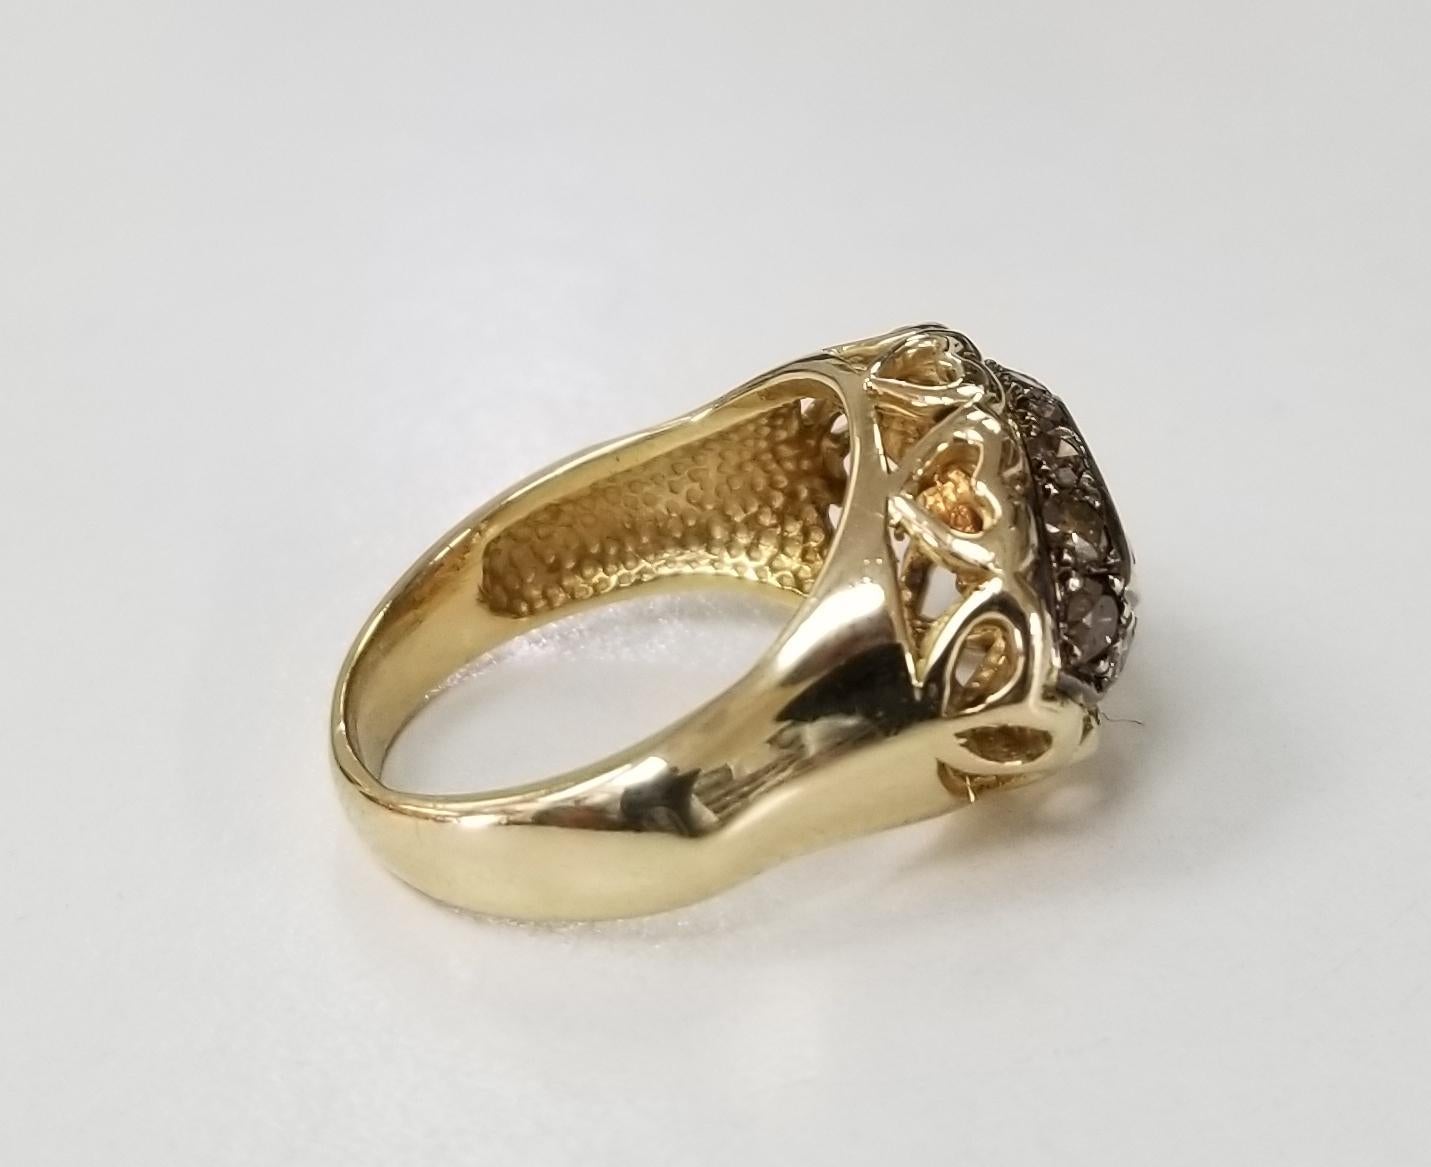 Contemporary 14 Karat Yellow Gold Brown Diamond Halo Ring Containing 1 Marquise Cut Diamond